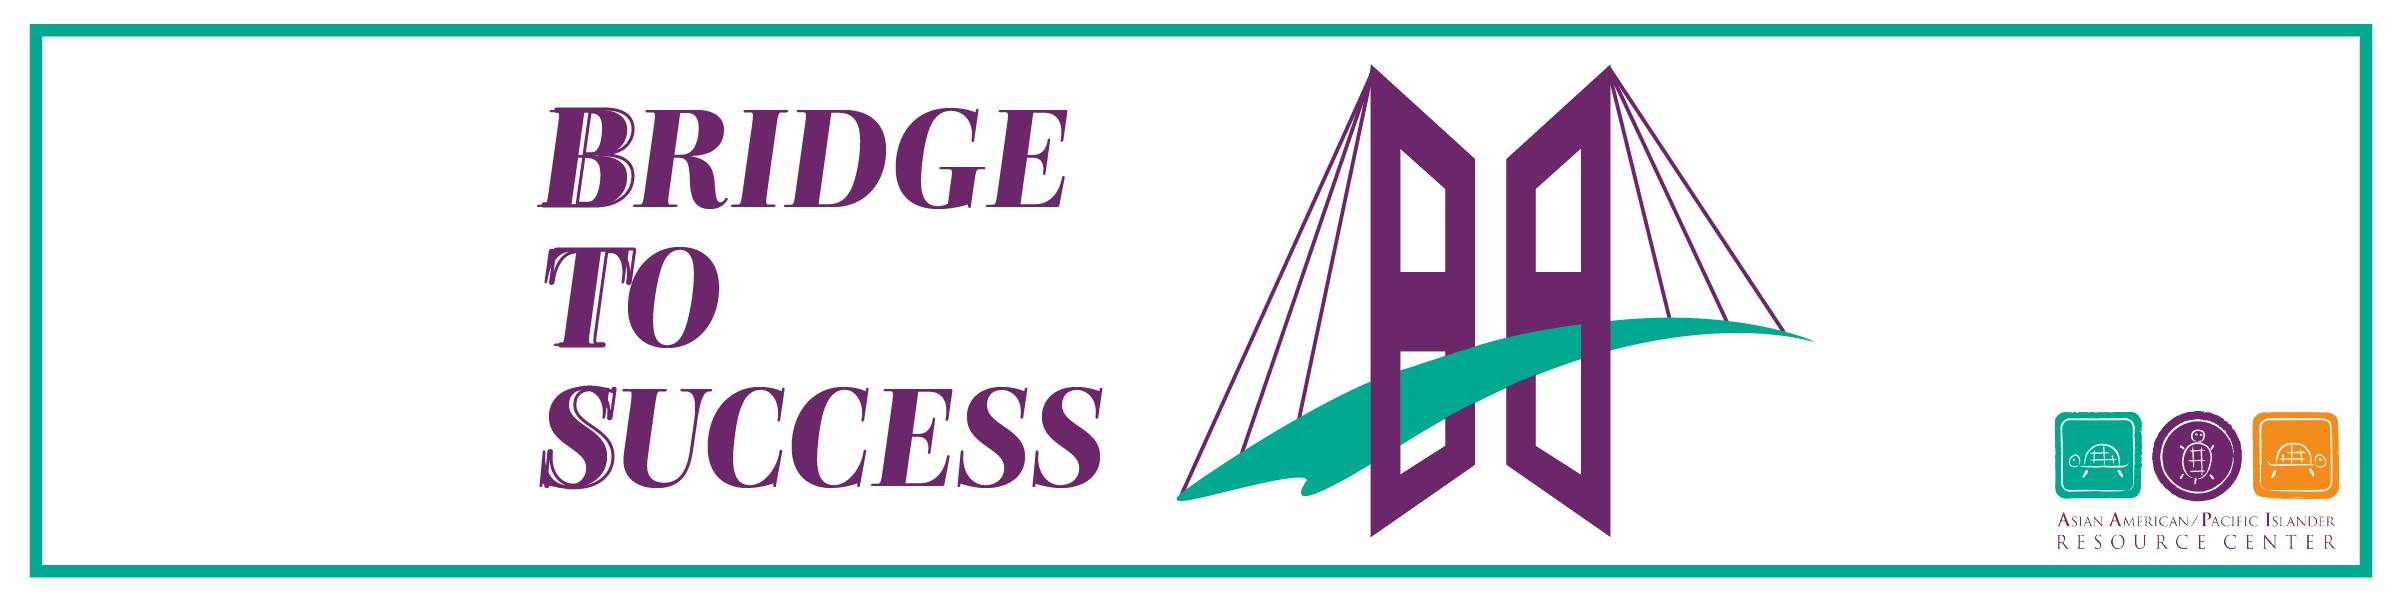 bridge to success logo, purple and green colors with a bridge icon